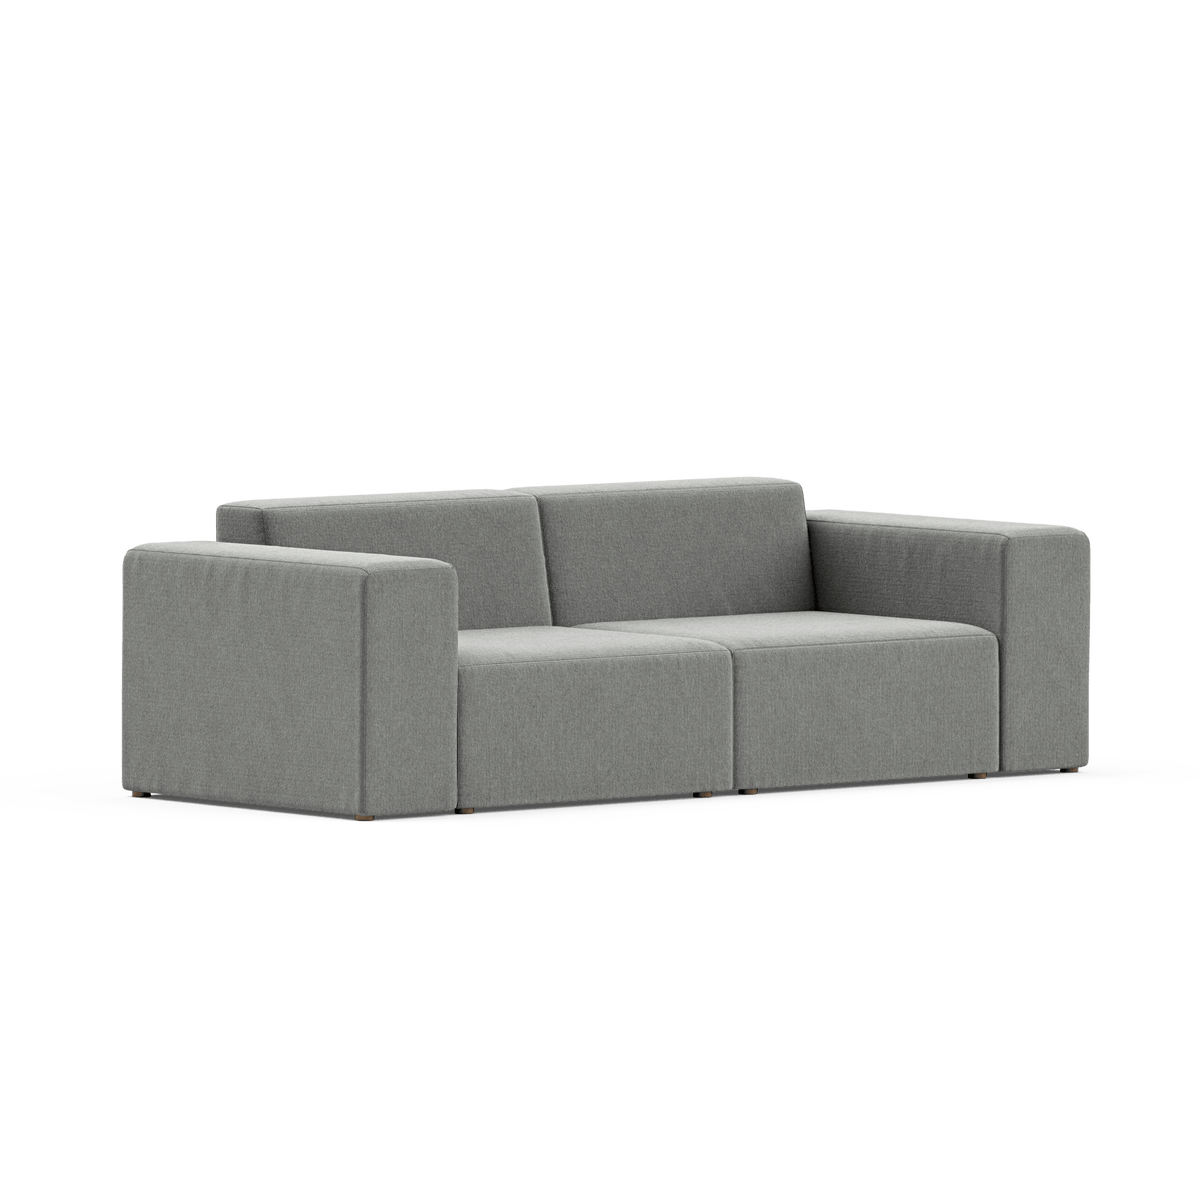 Low Profile Deep Two Piece Modular Sofa